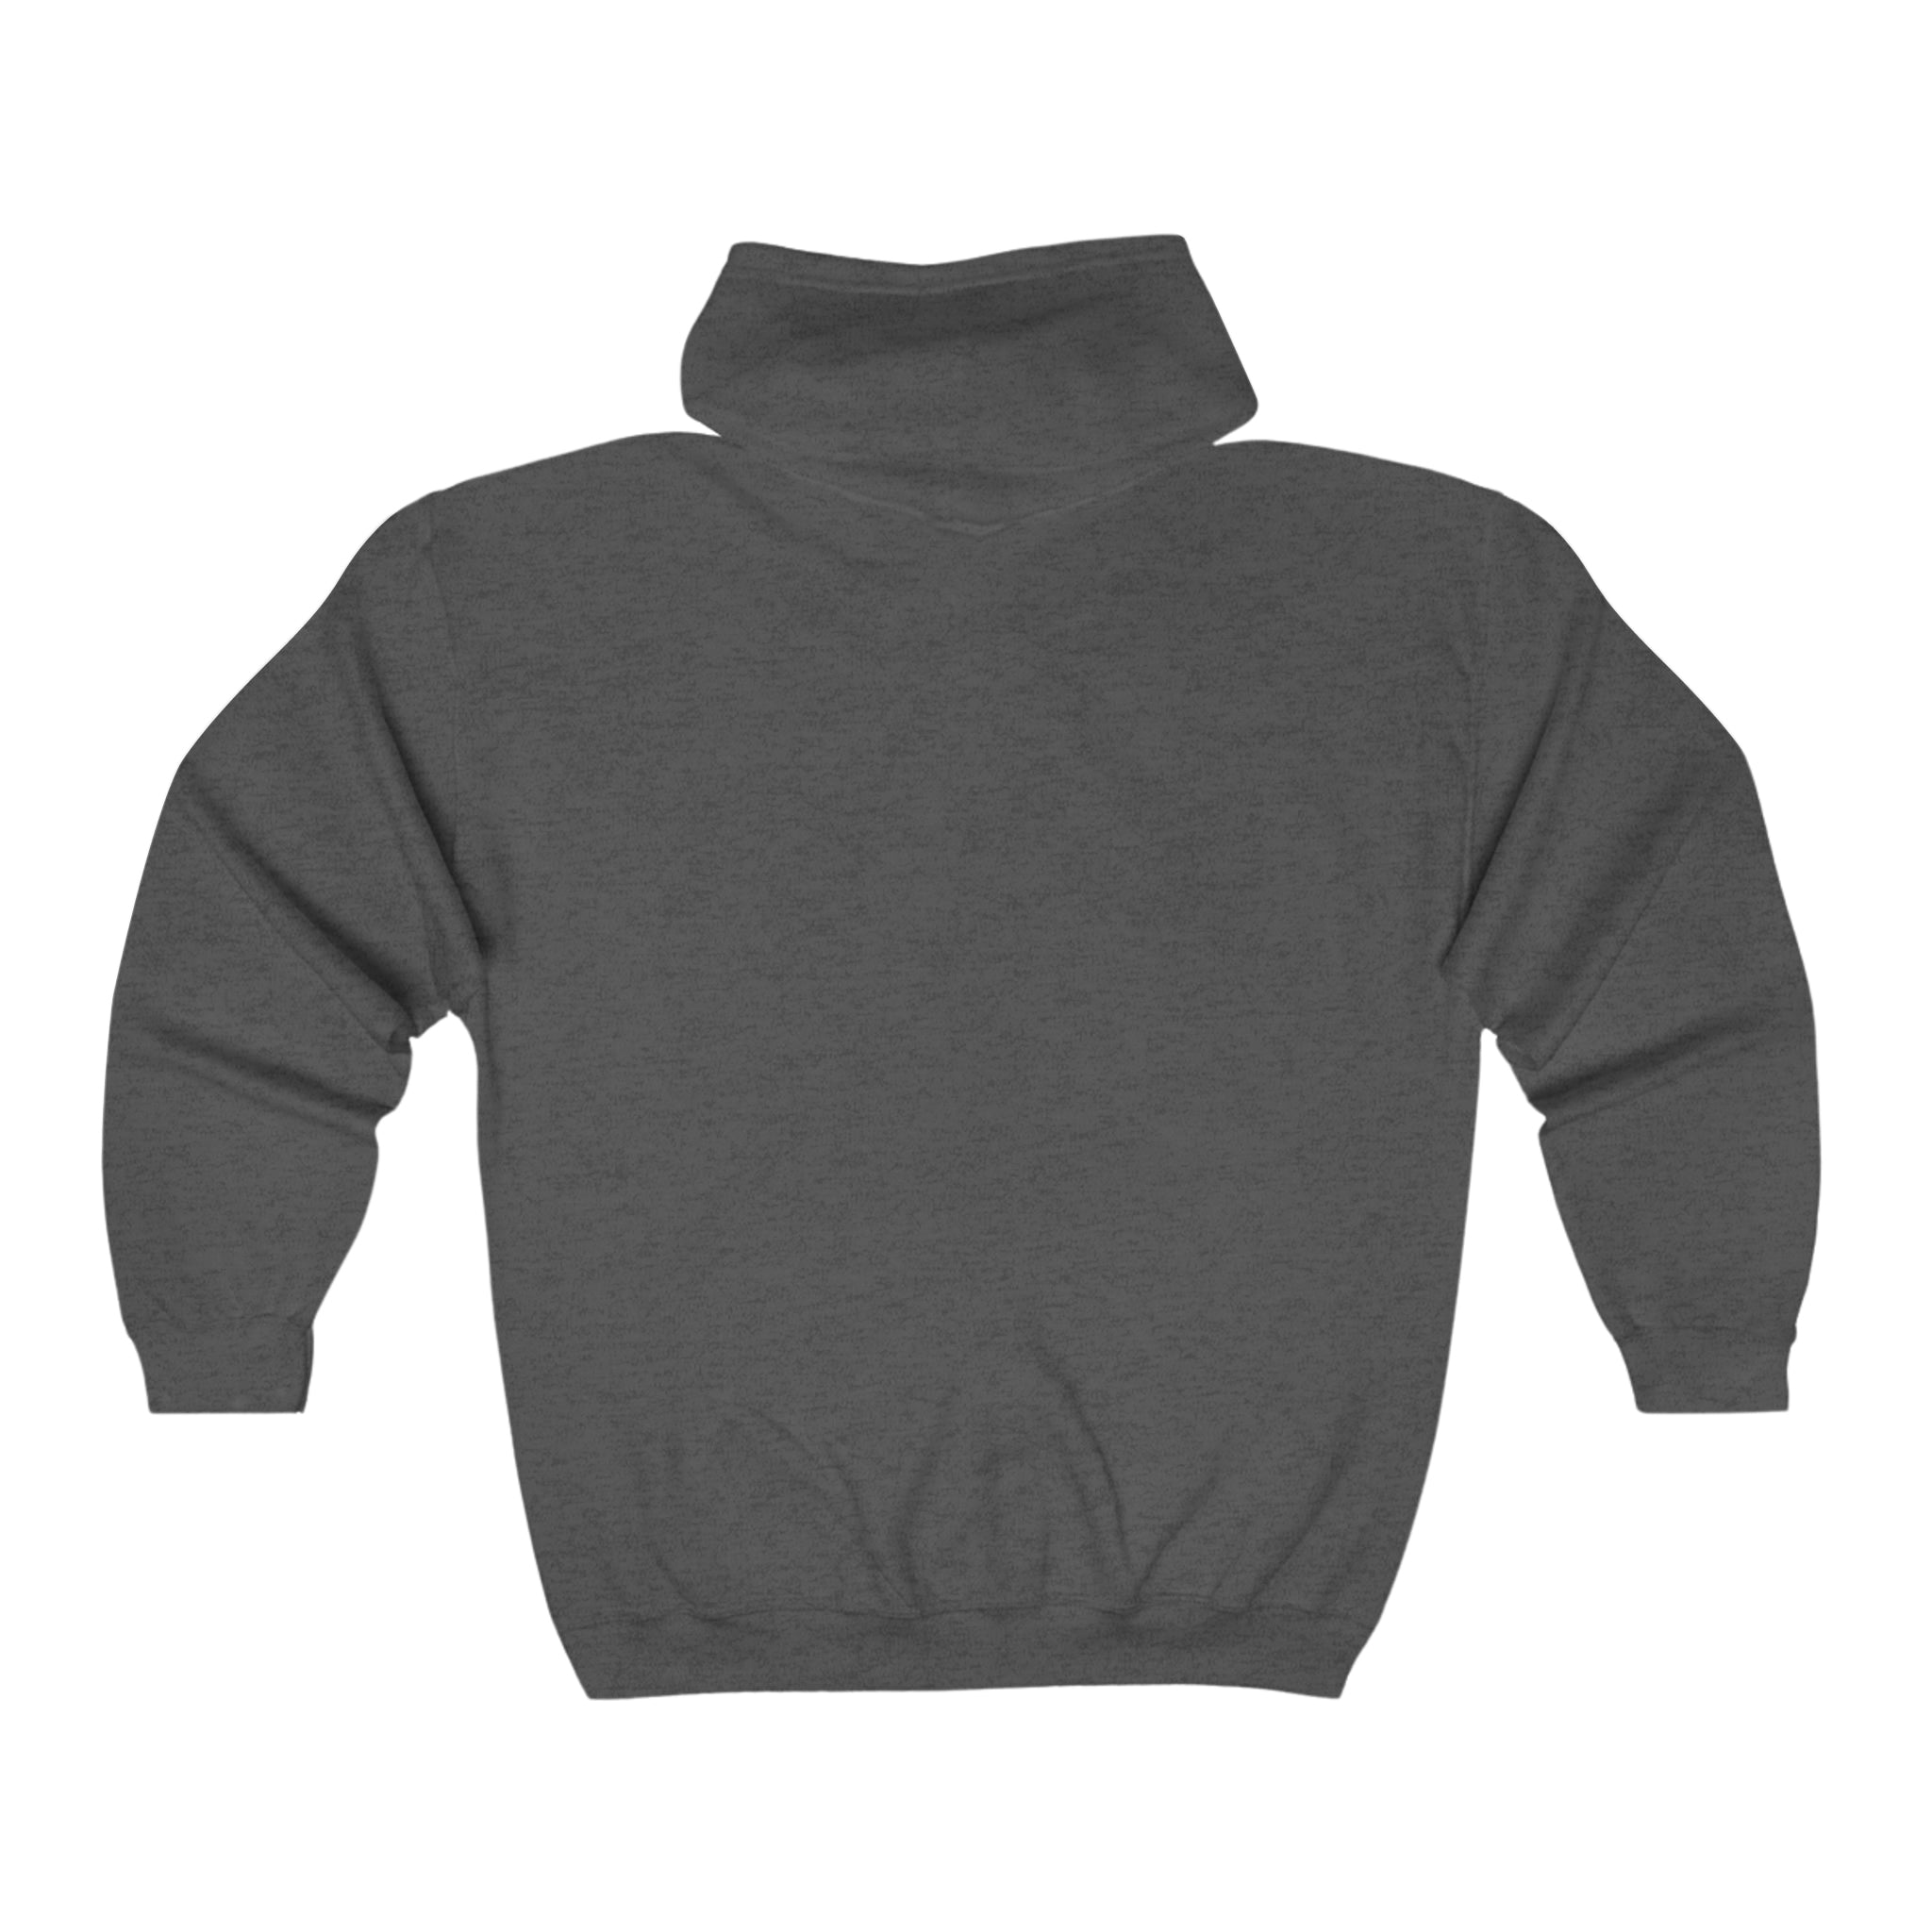 Unisex Heavy Blend™ Full Zip Hooded Sweatshirt - Baby Animals - Beaver